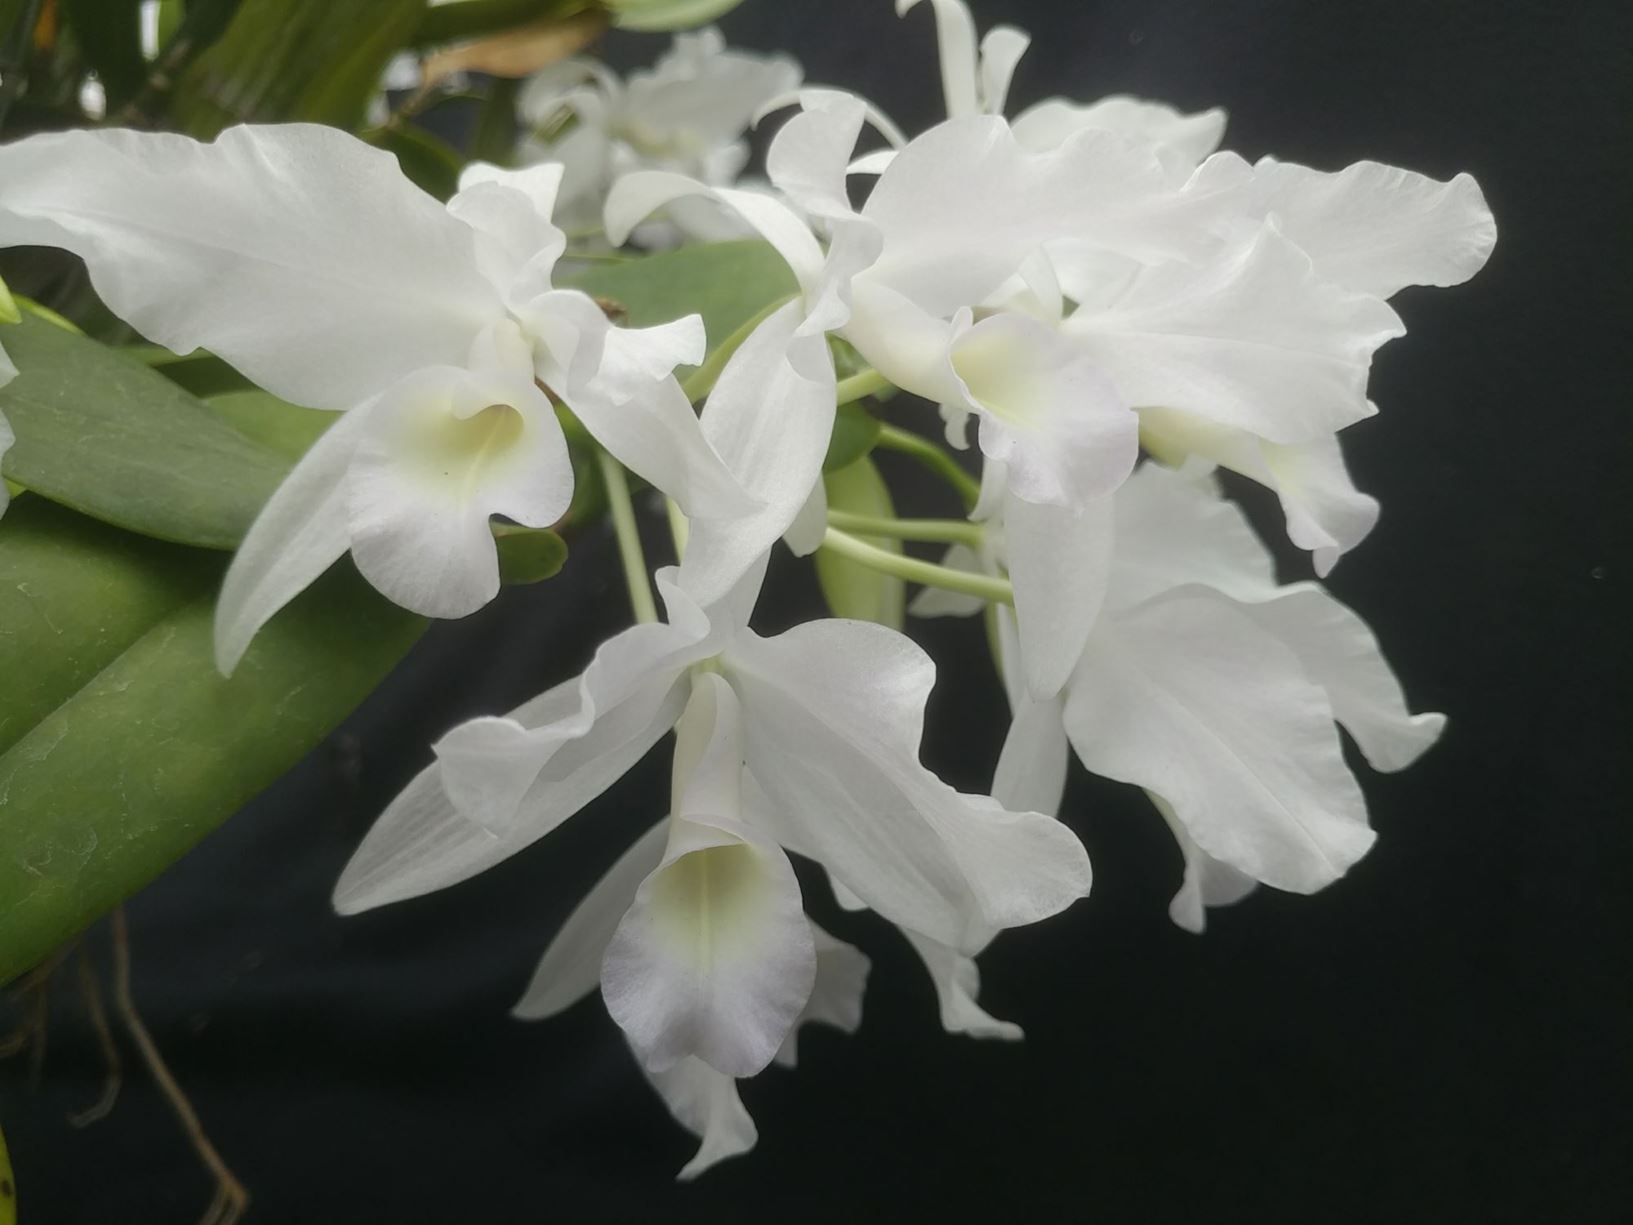 Guarianthe skinneri var. alba - corsage orchid